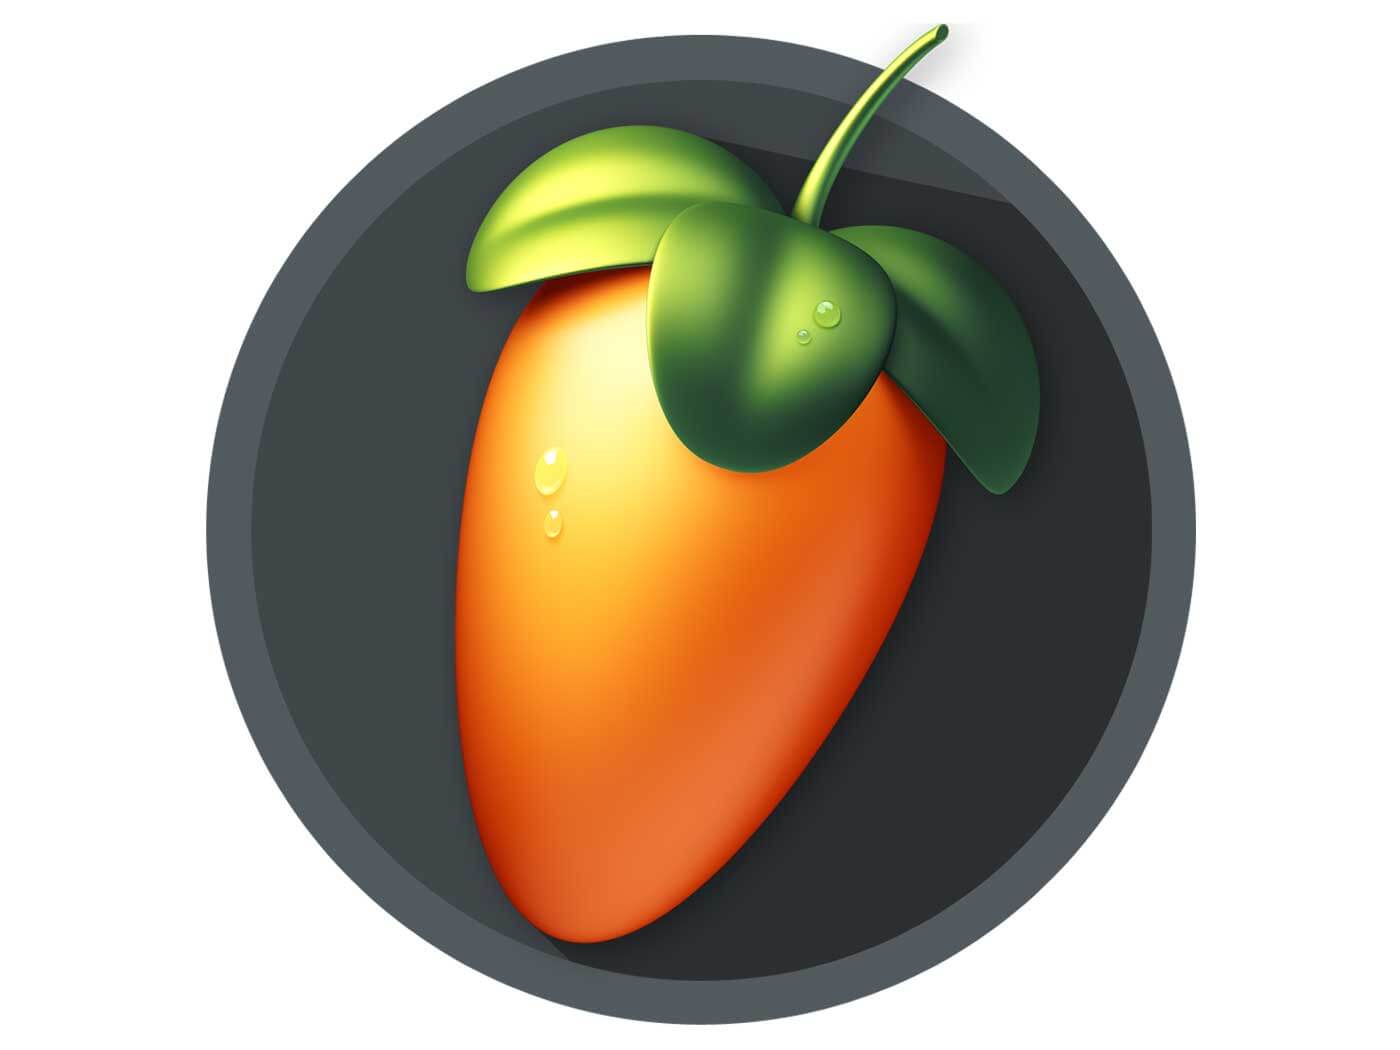 FL Studio Logo